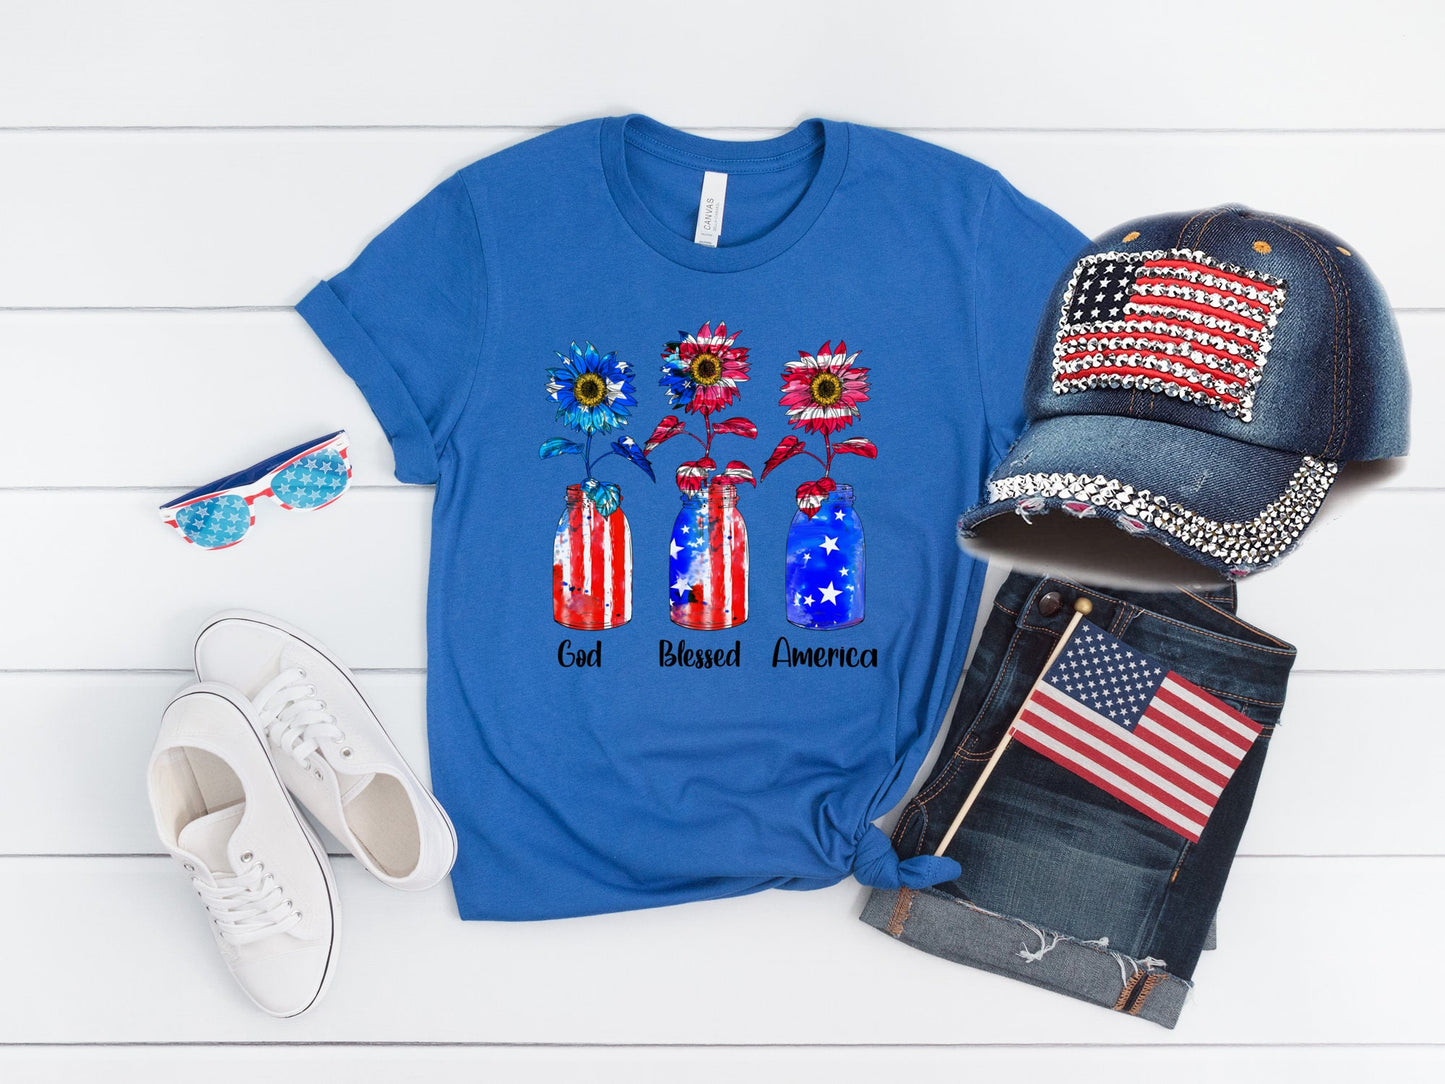 God Blessed America Sunflowers Shirt, 4th of July Shirt, Independence Day Shirt, America Shirt, USA Flag Shirt, Patriotic Shirt